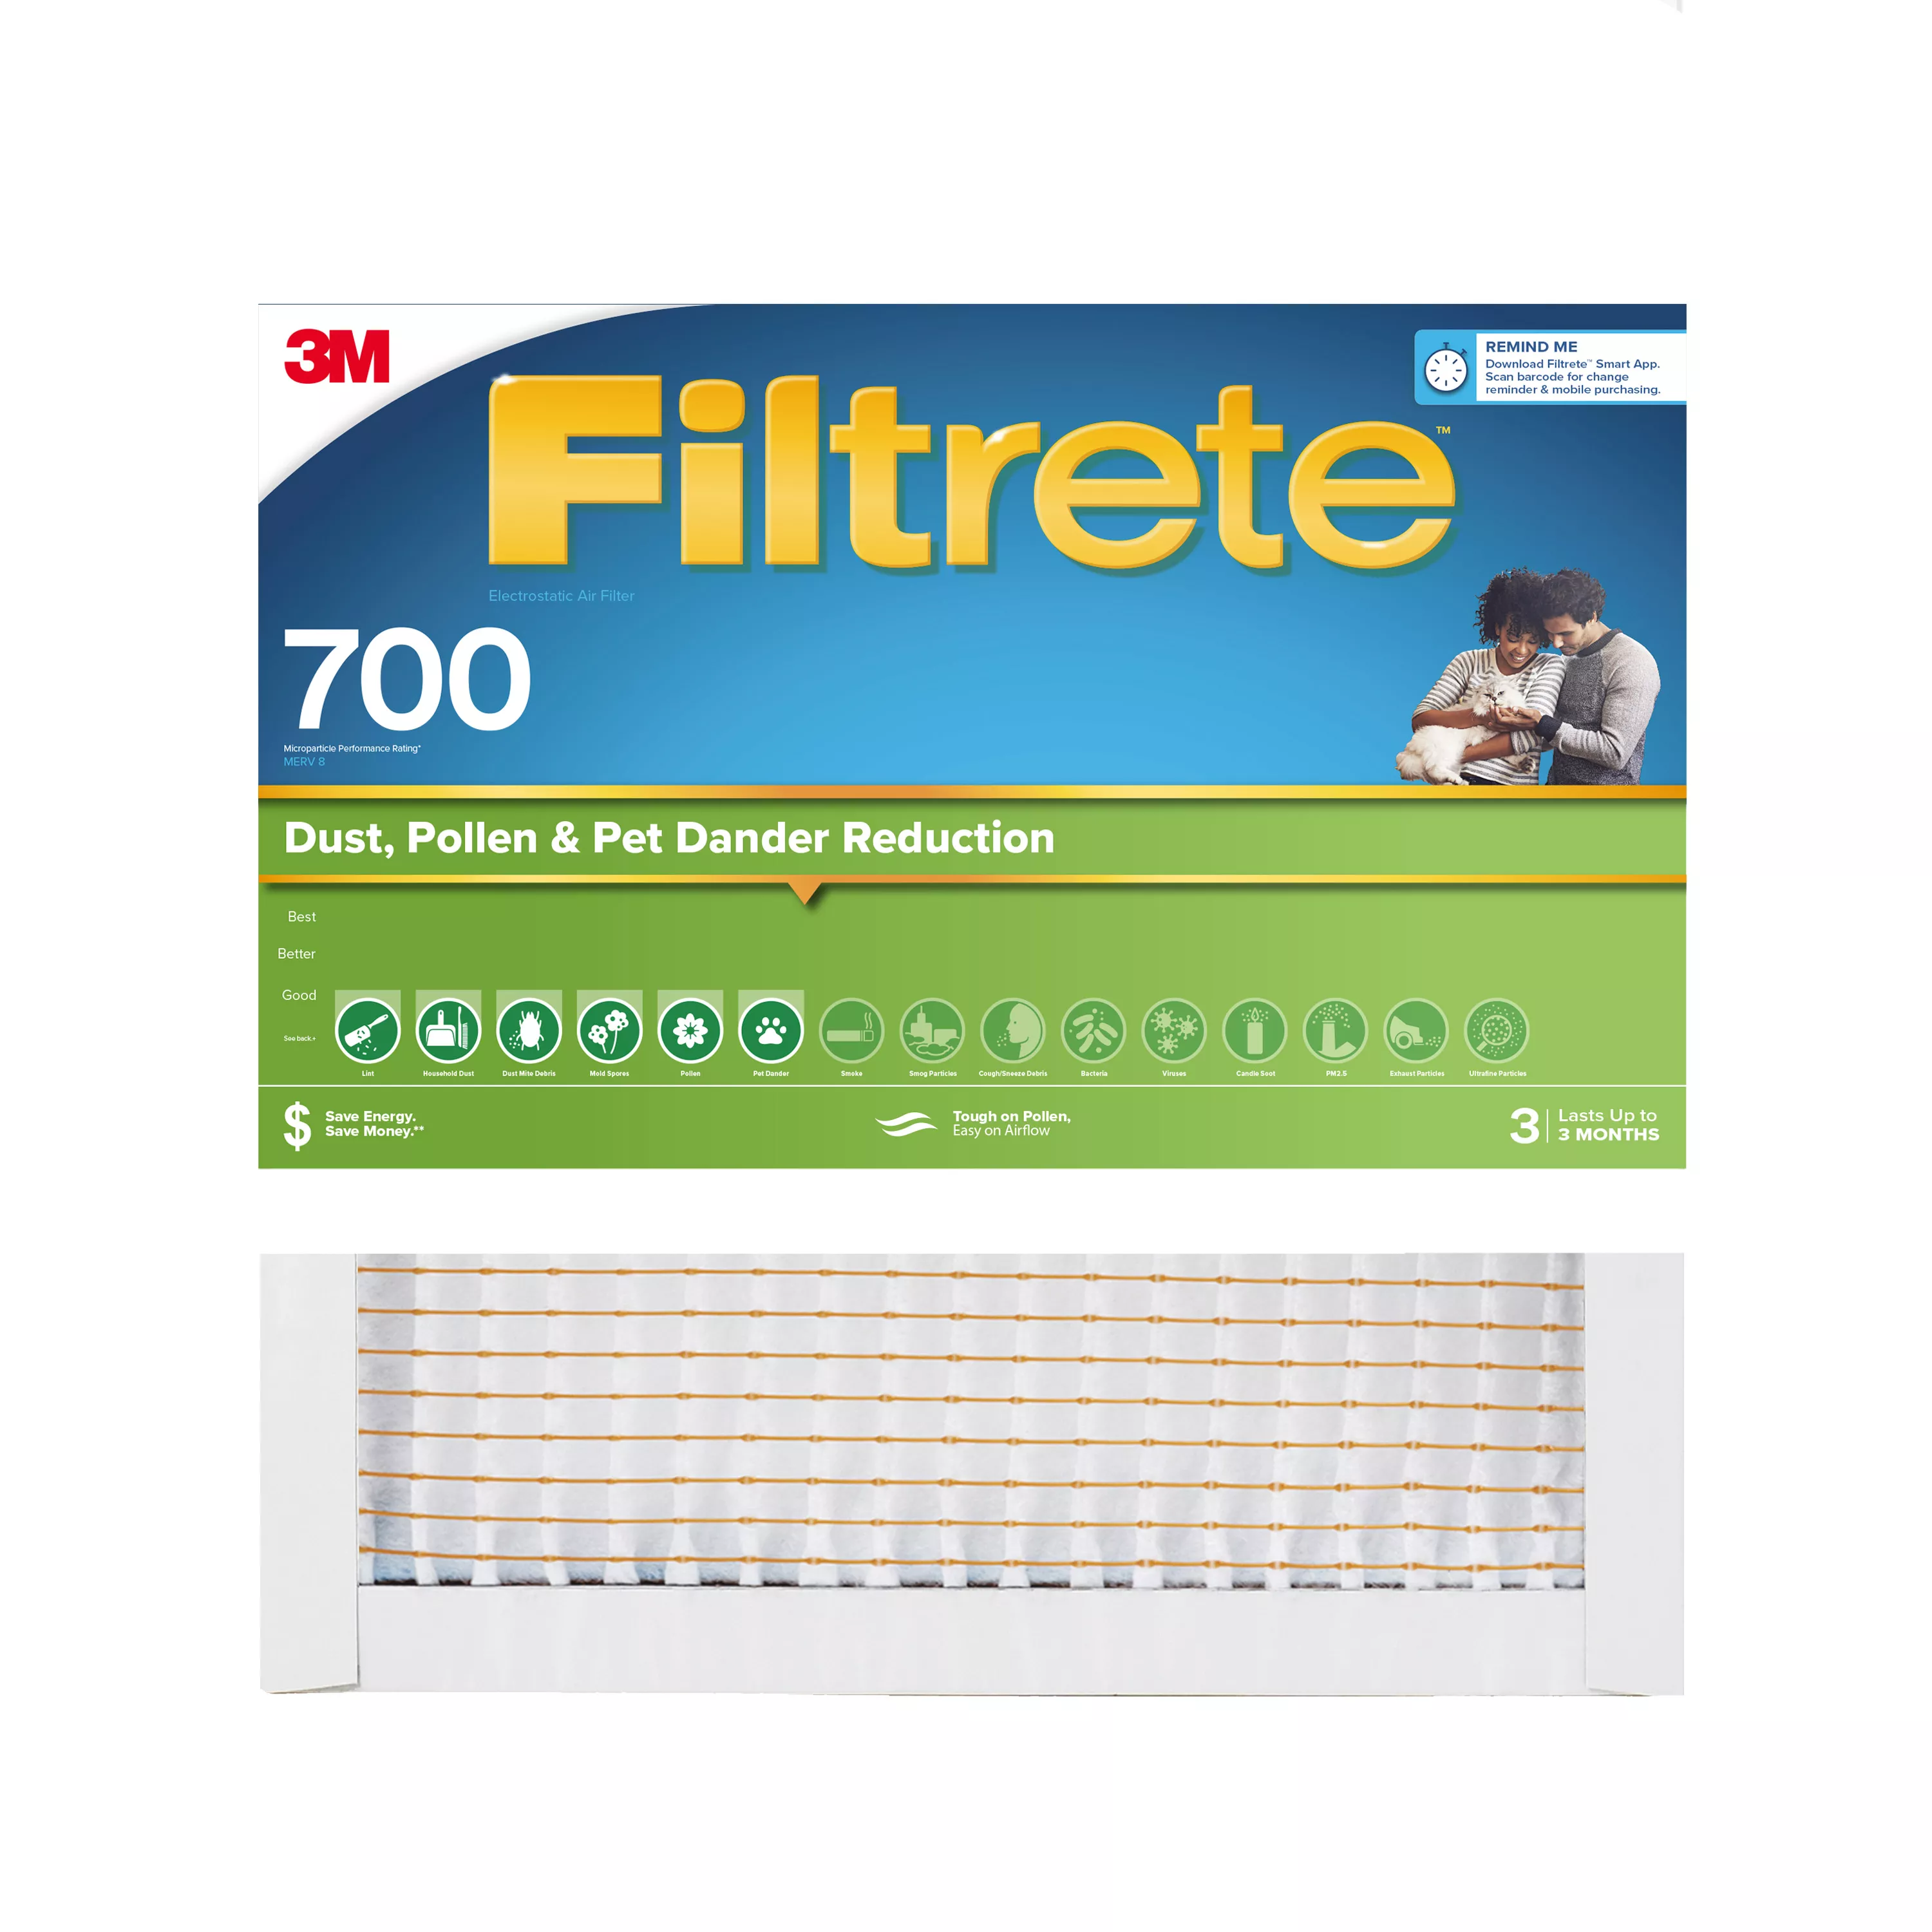 Filtrete™ Electrostatic Air Filter 700 MPR 710-4PK-1E, 12 in x 12 in x 1 in (30.4 cm x 30.4 cm x 2.5 cm)